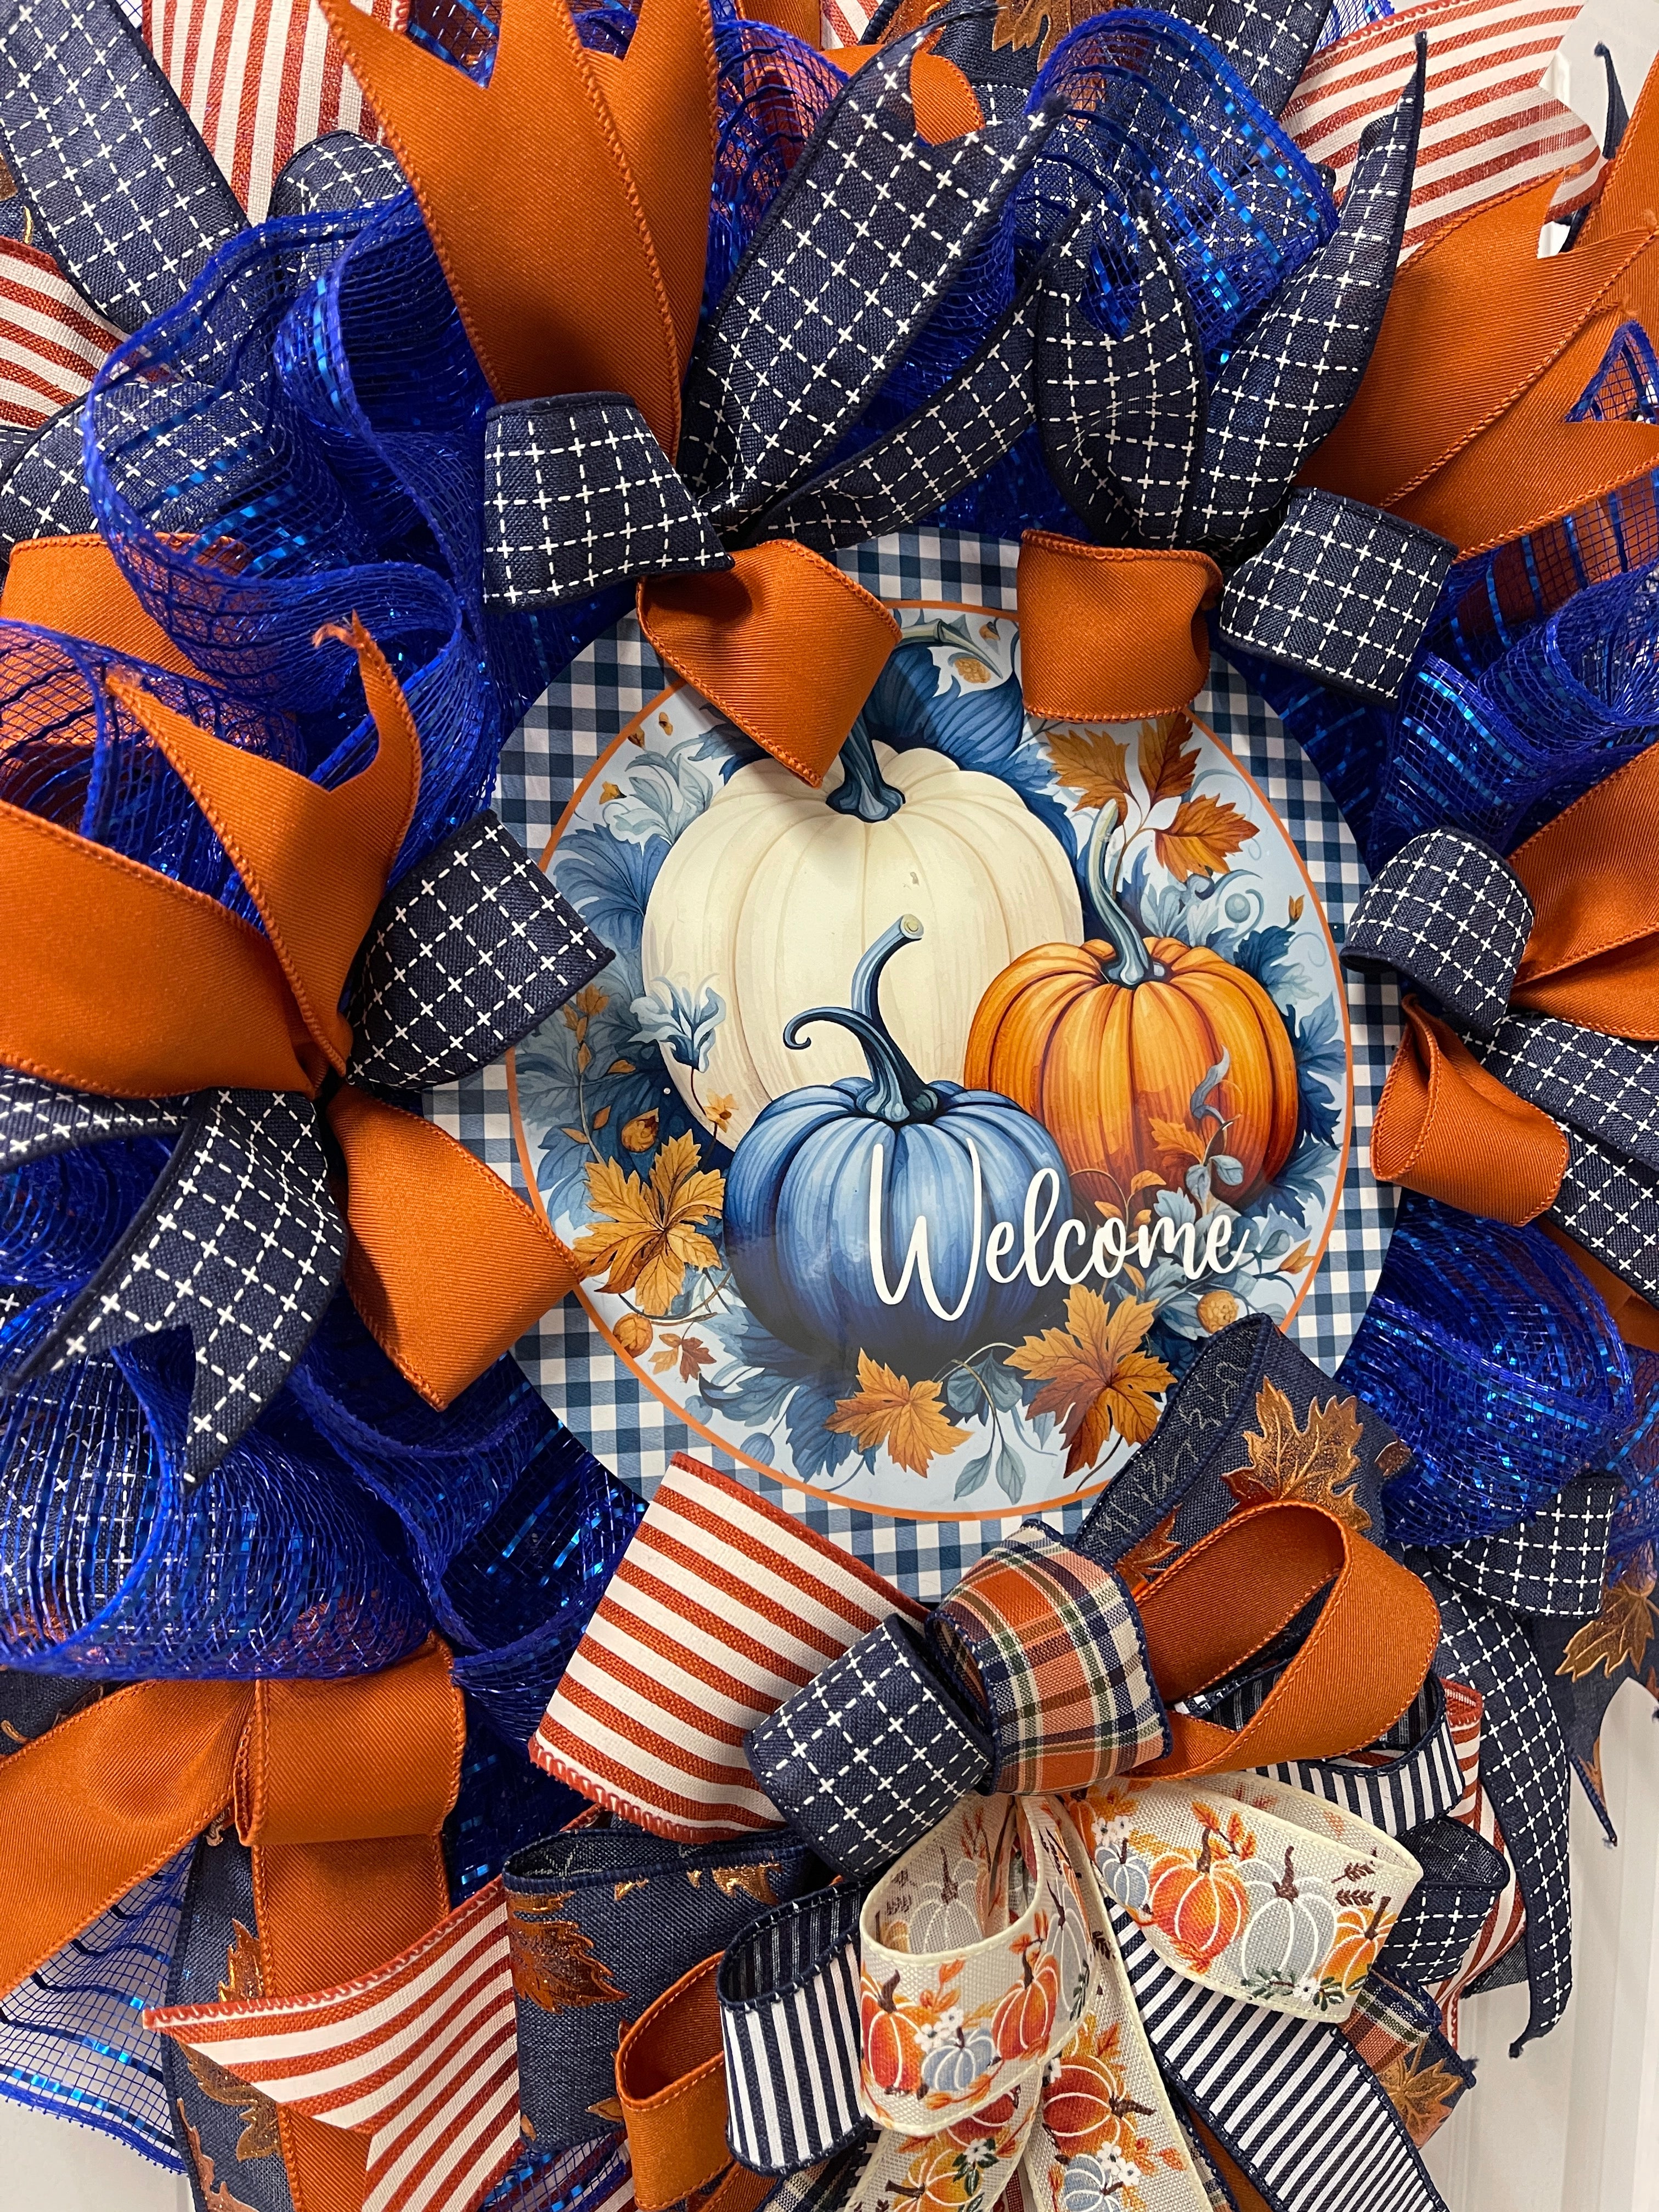 Fall Wrlcome Pumpkin Wreath, KatsCreationsNMore